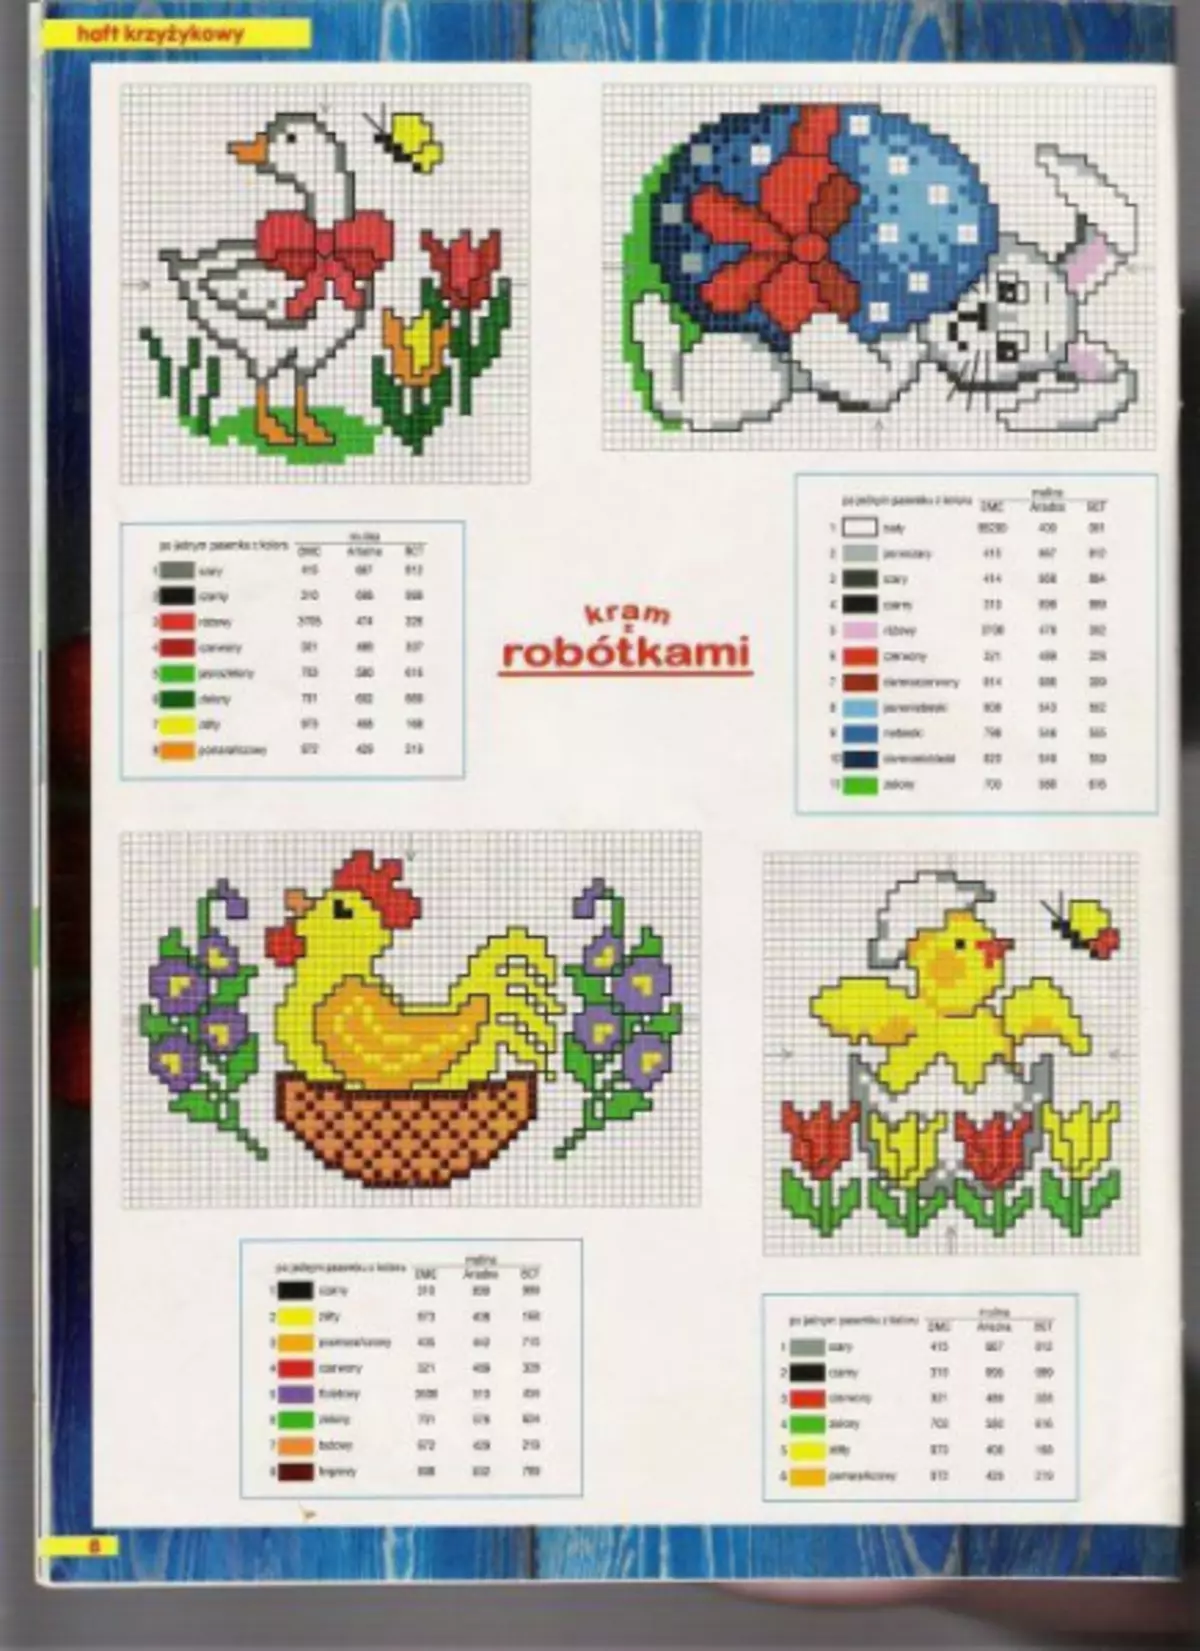 Embroidery სქემები სააღდგომო კვერცხები